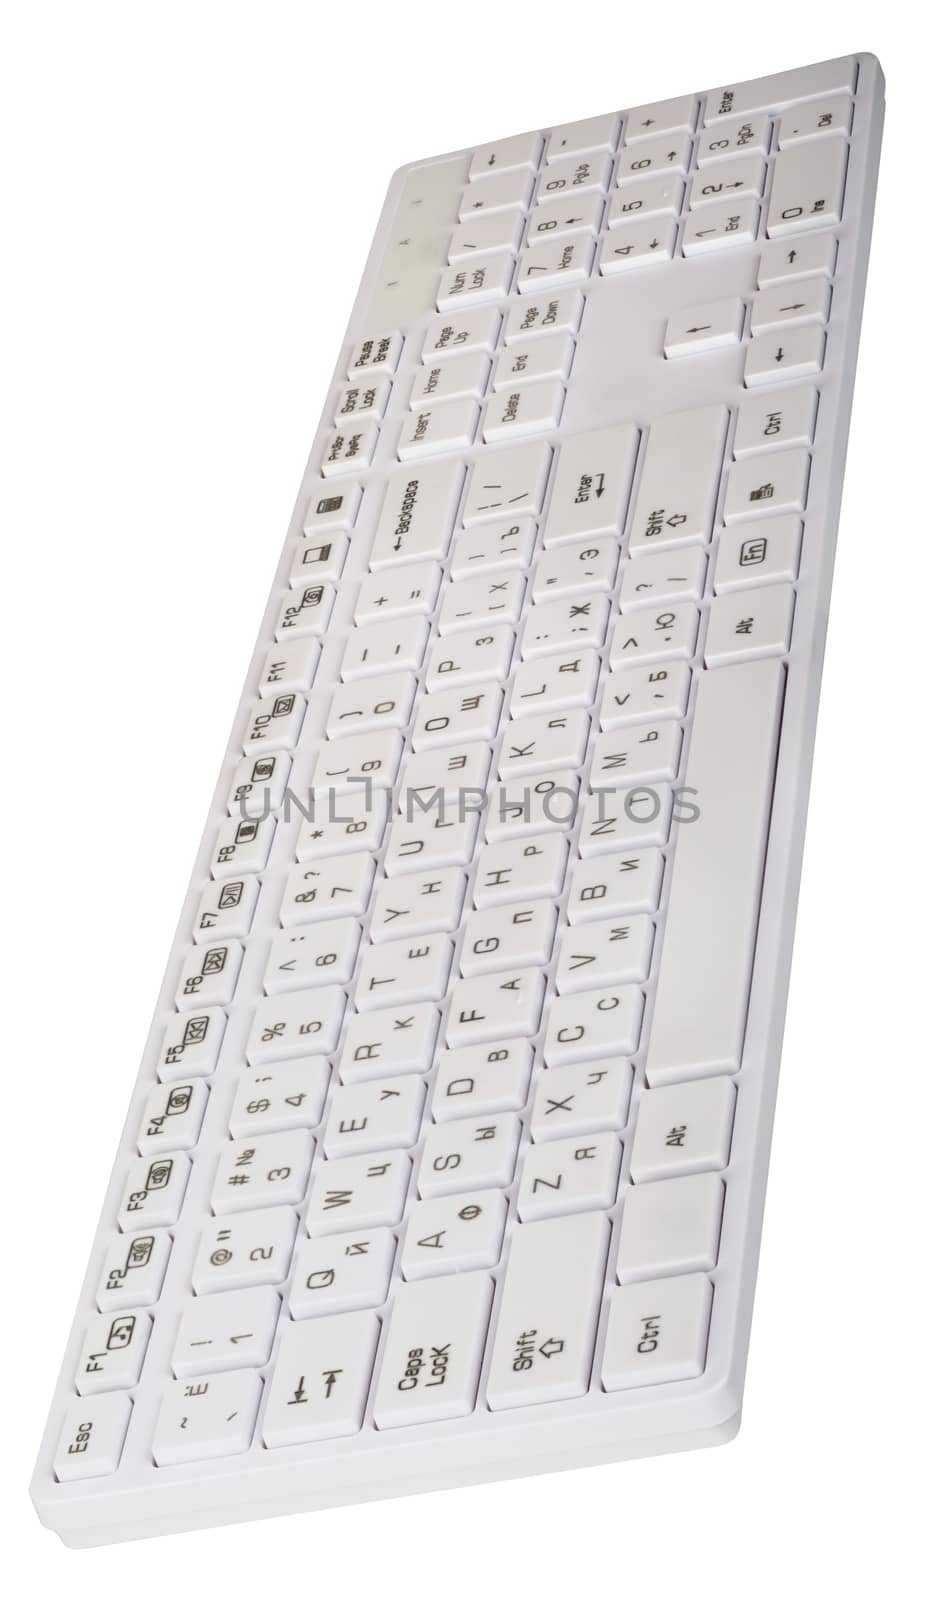 White keyboard by cherezoff